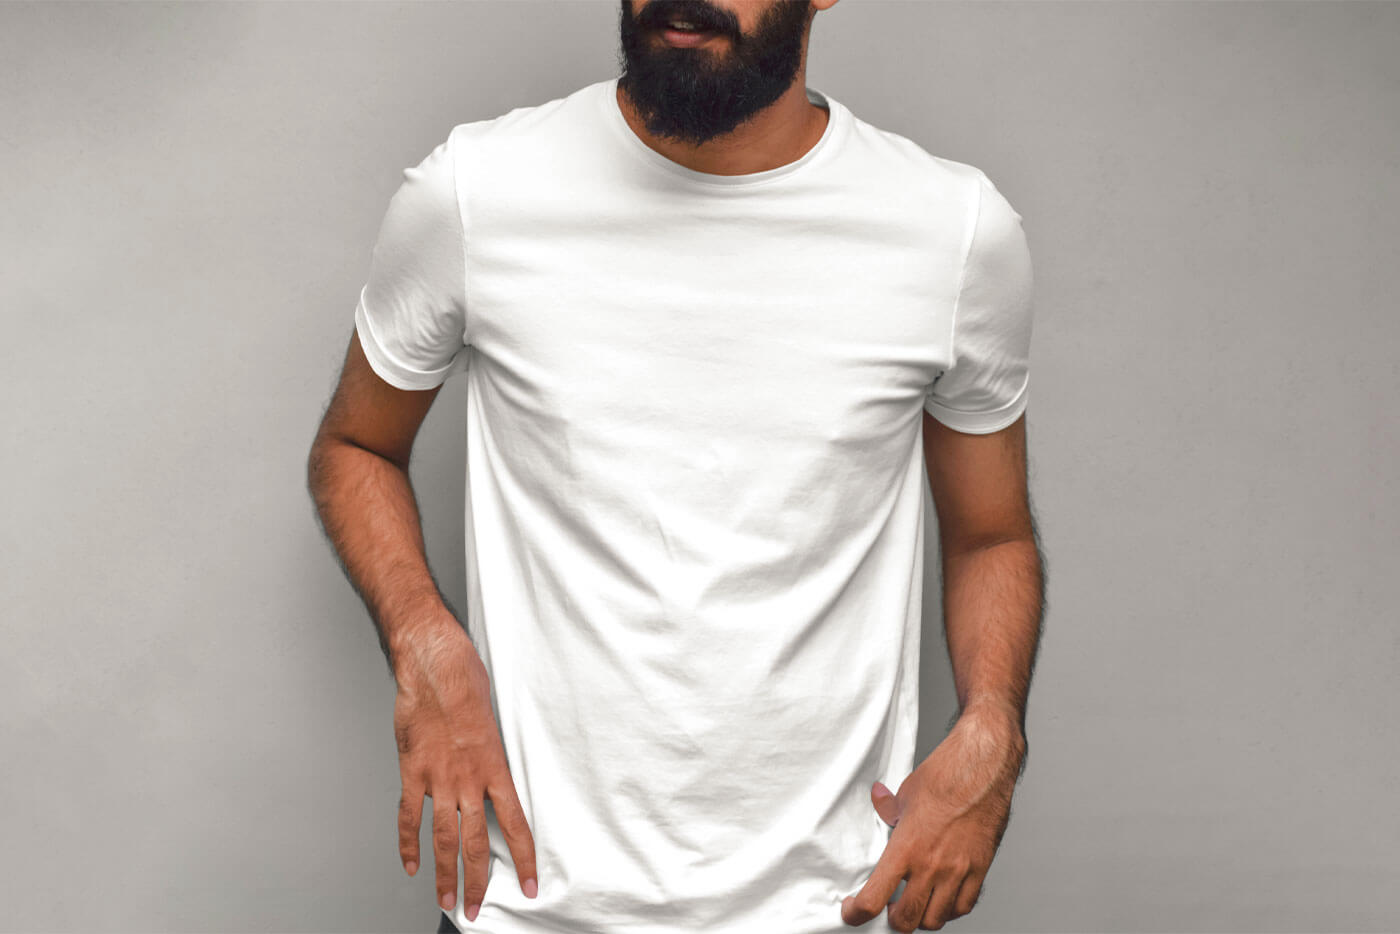 Free Beard Man Wearing T-Shirt Mockup